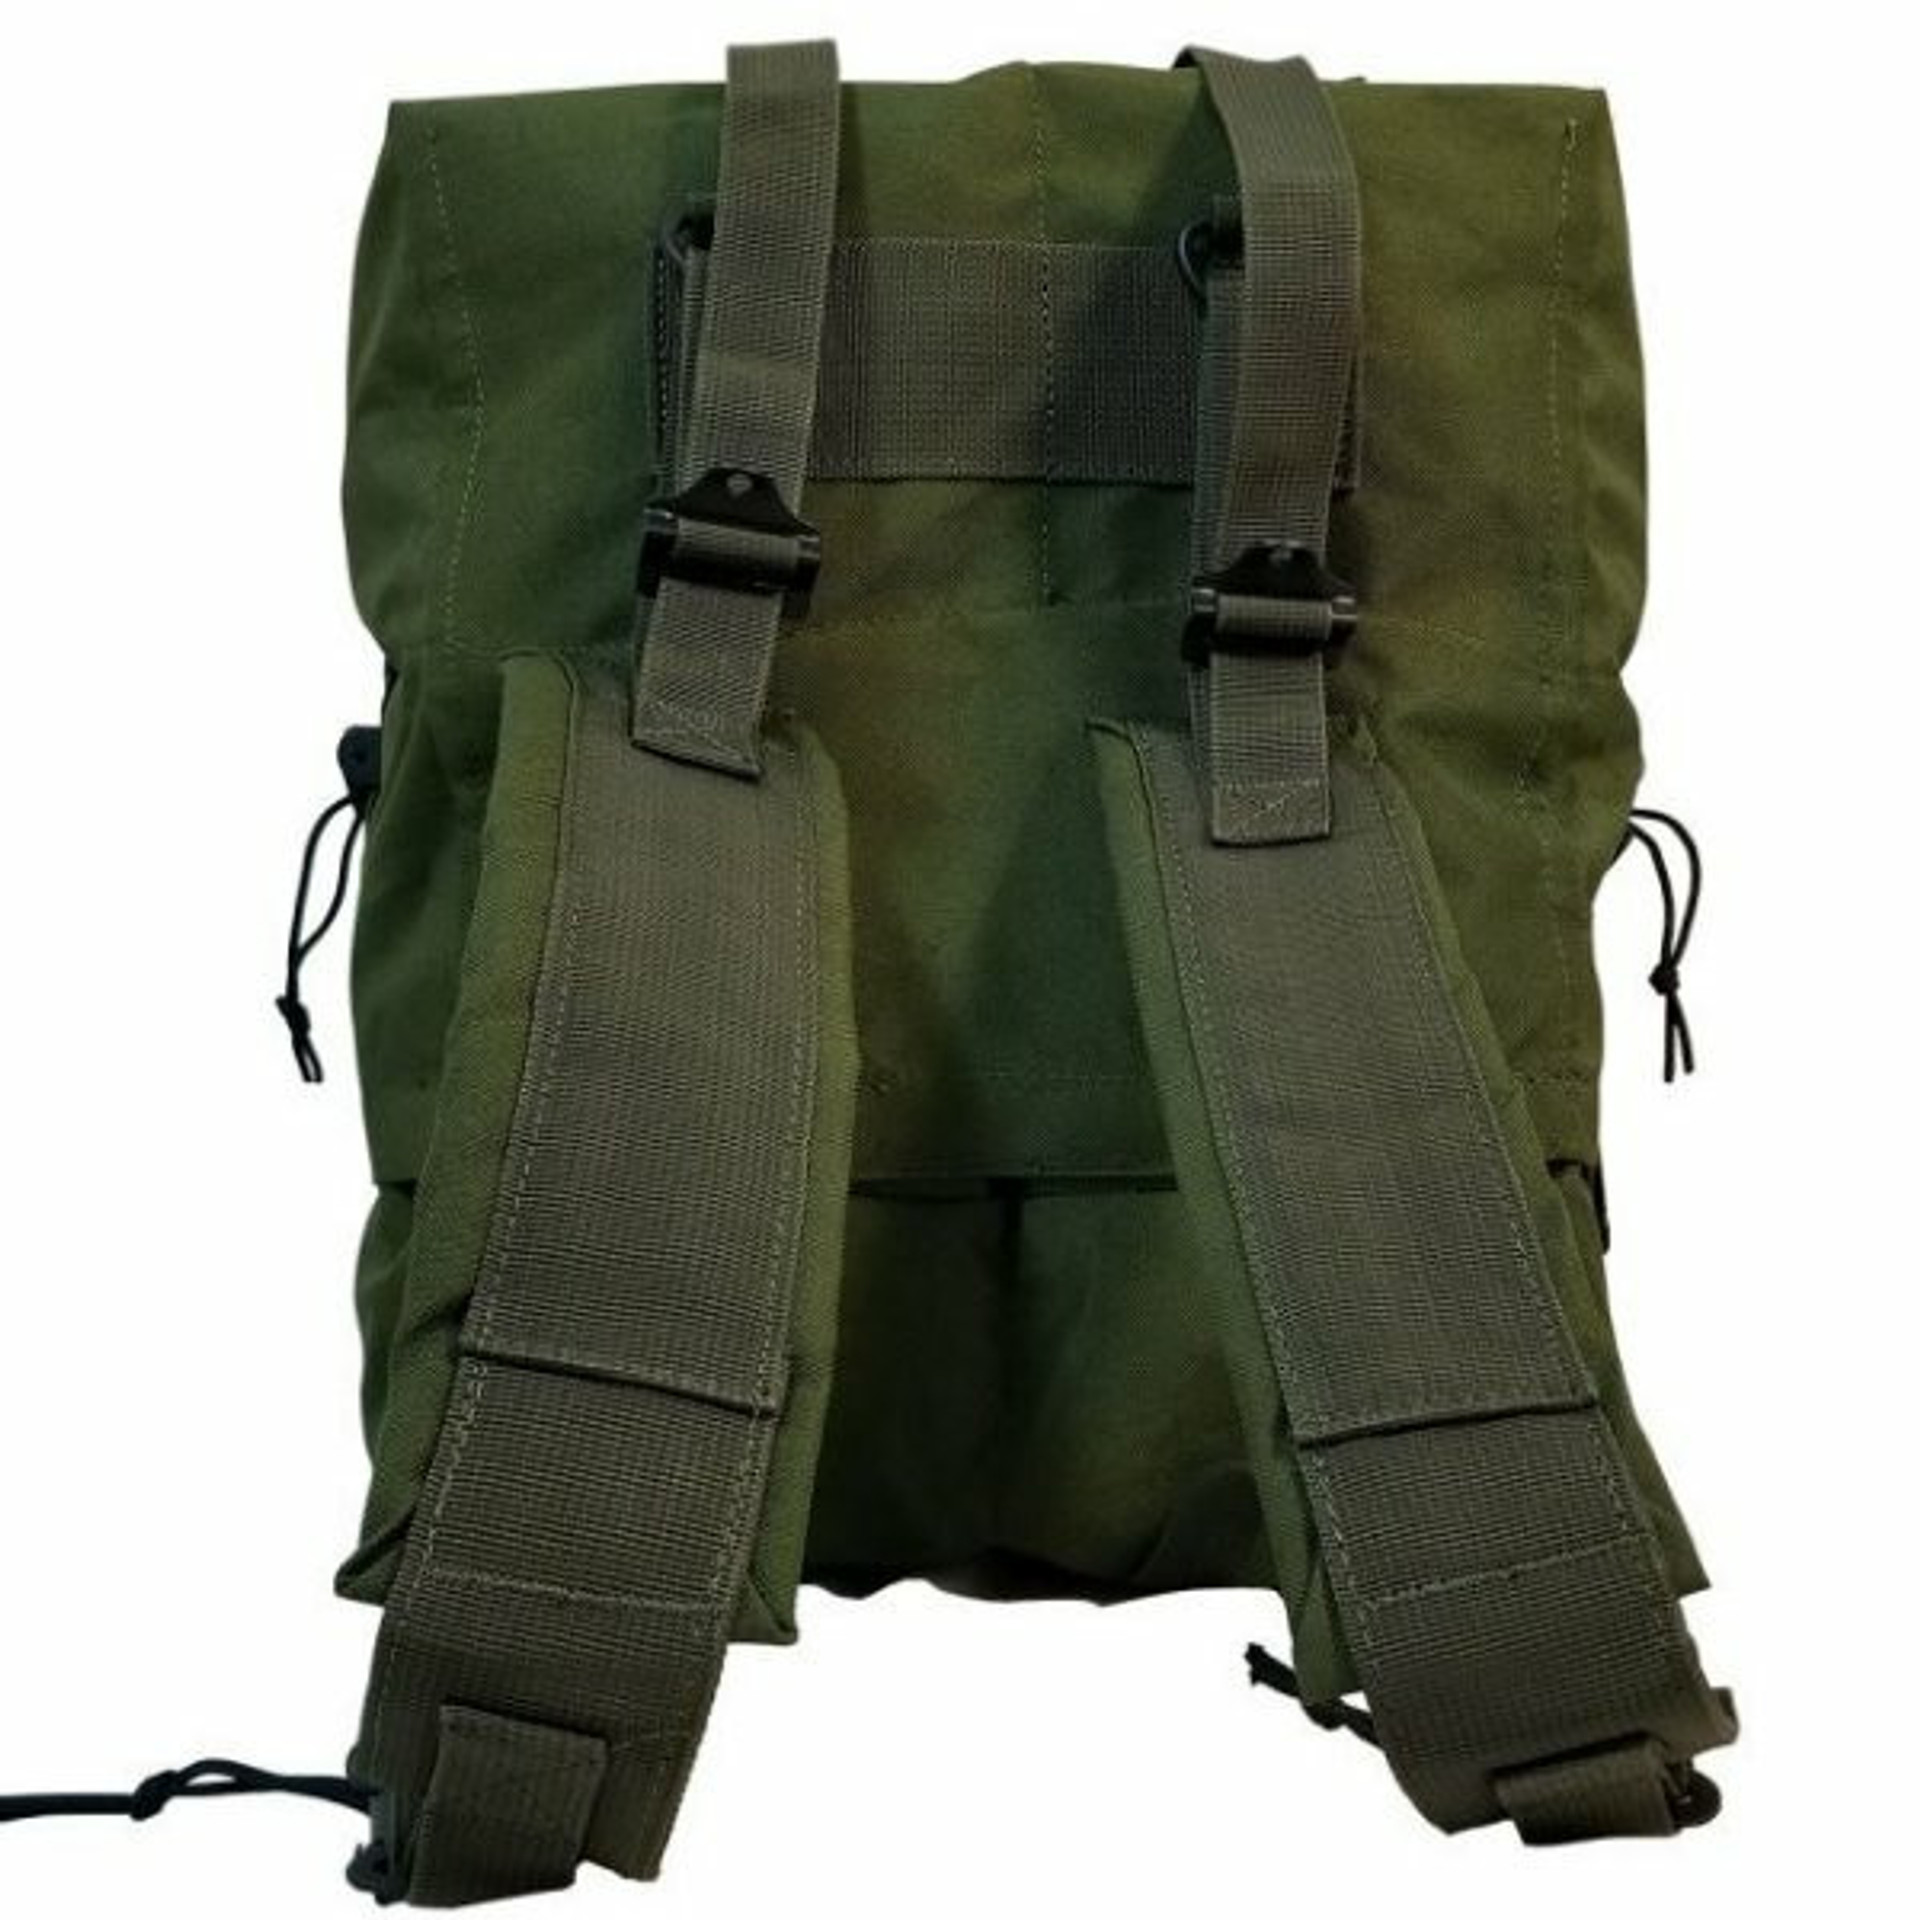 M17 Medic Bag | Army Navy Outdoors